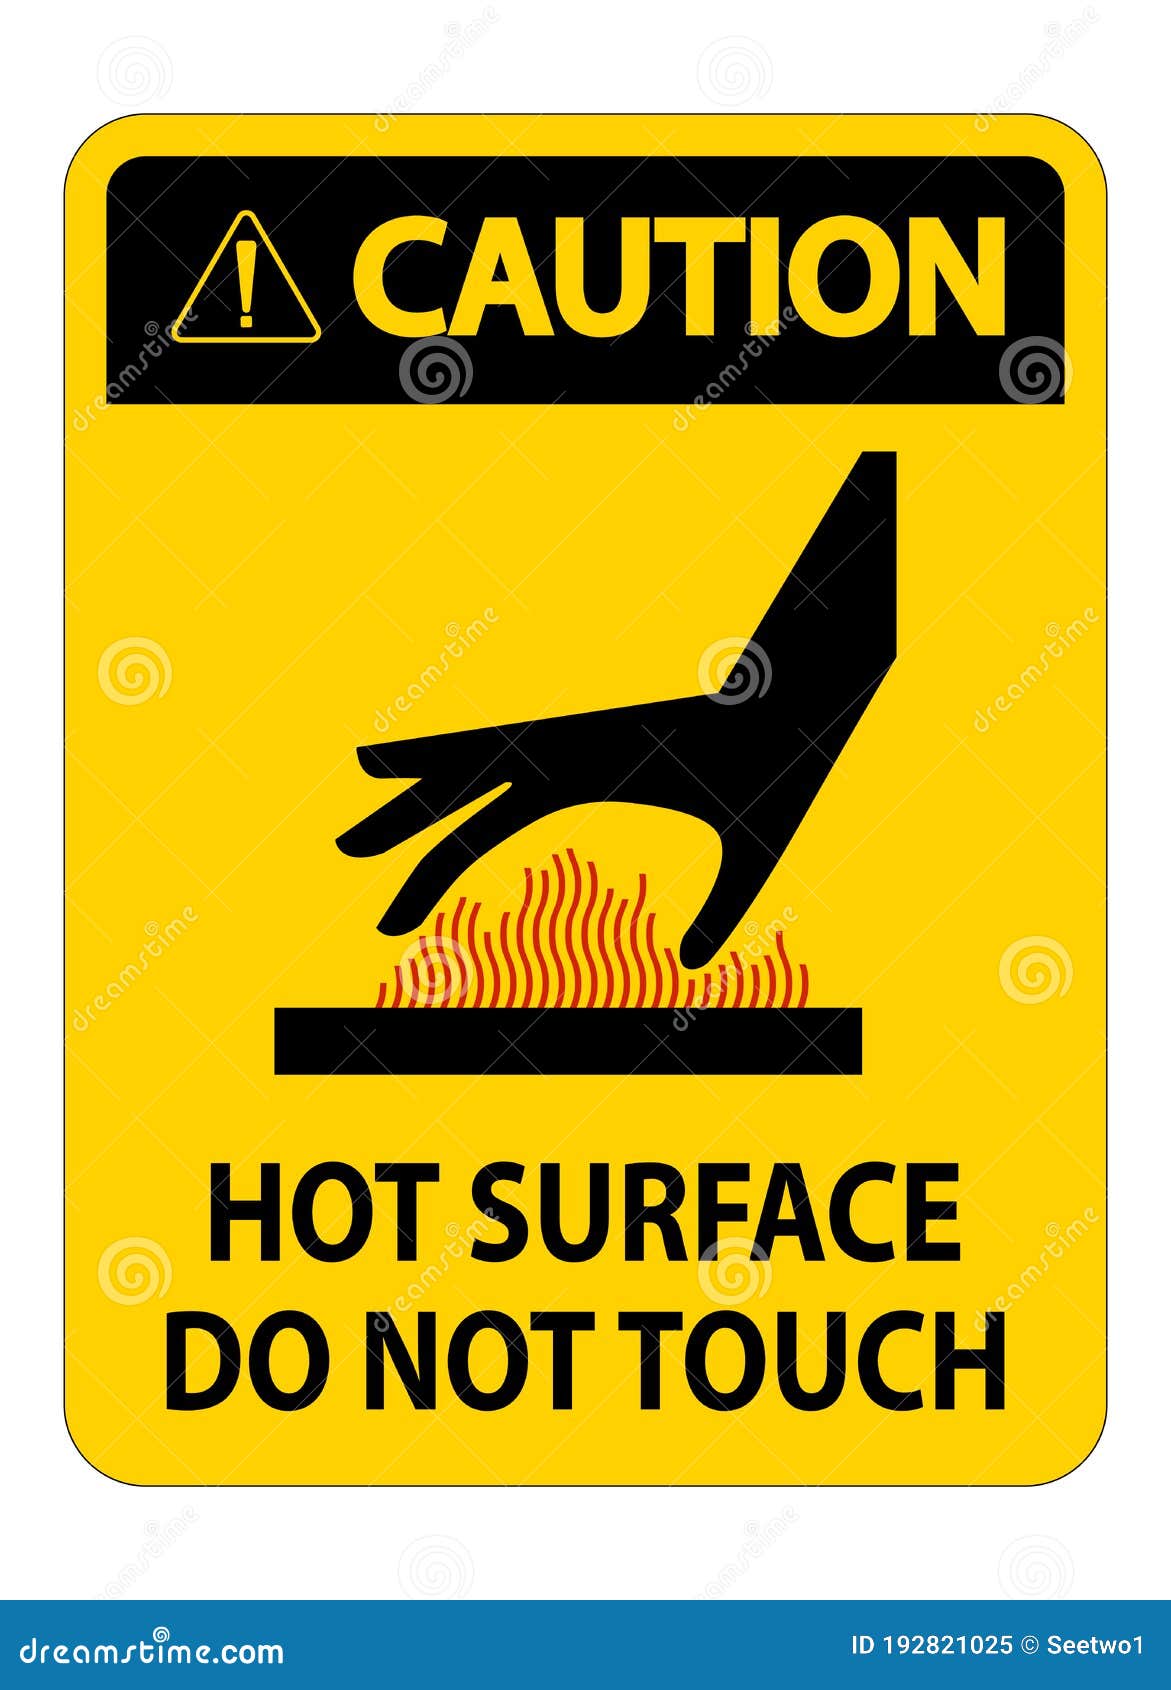 Warning/Hot Surface Inside (H6043-TGWH) Label